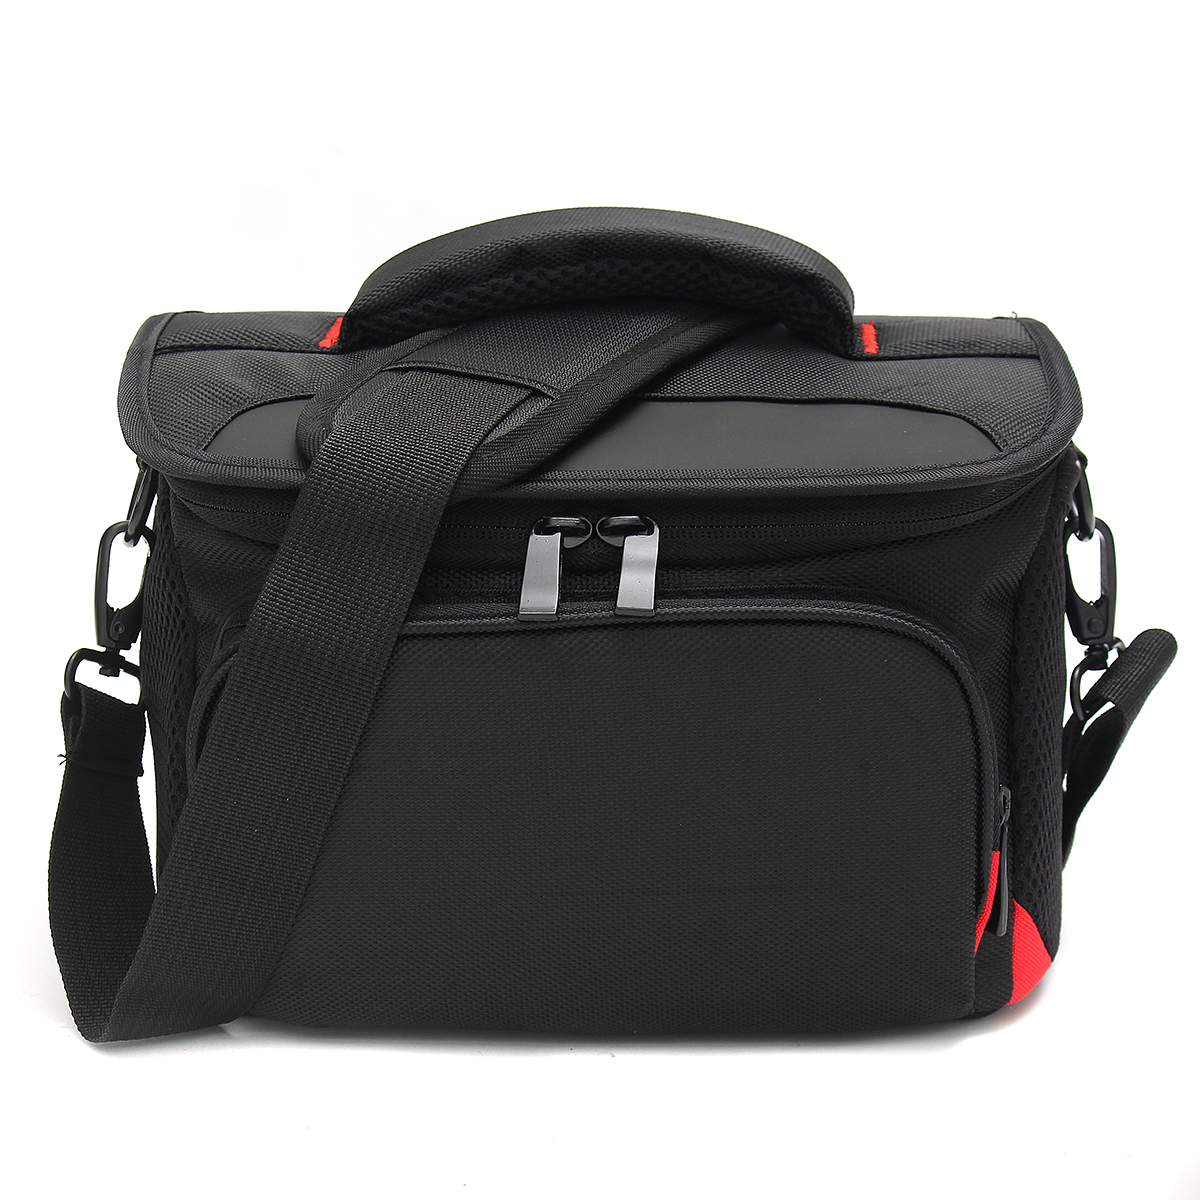 Waterproof-Camera-Shoulder-Bag-Travel-Carrying-Case-with-Rain-Cover-For-DSLR-SLR-Camera-Flash-Lens-1633799-2